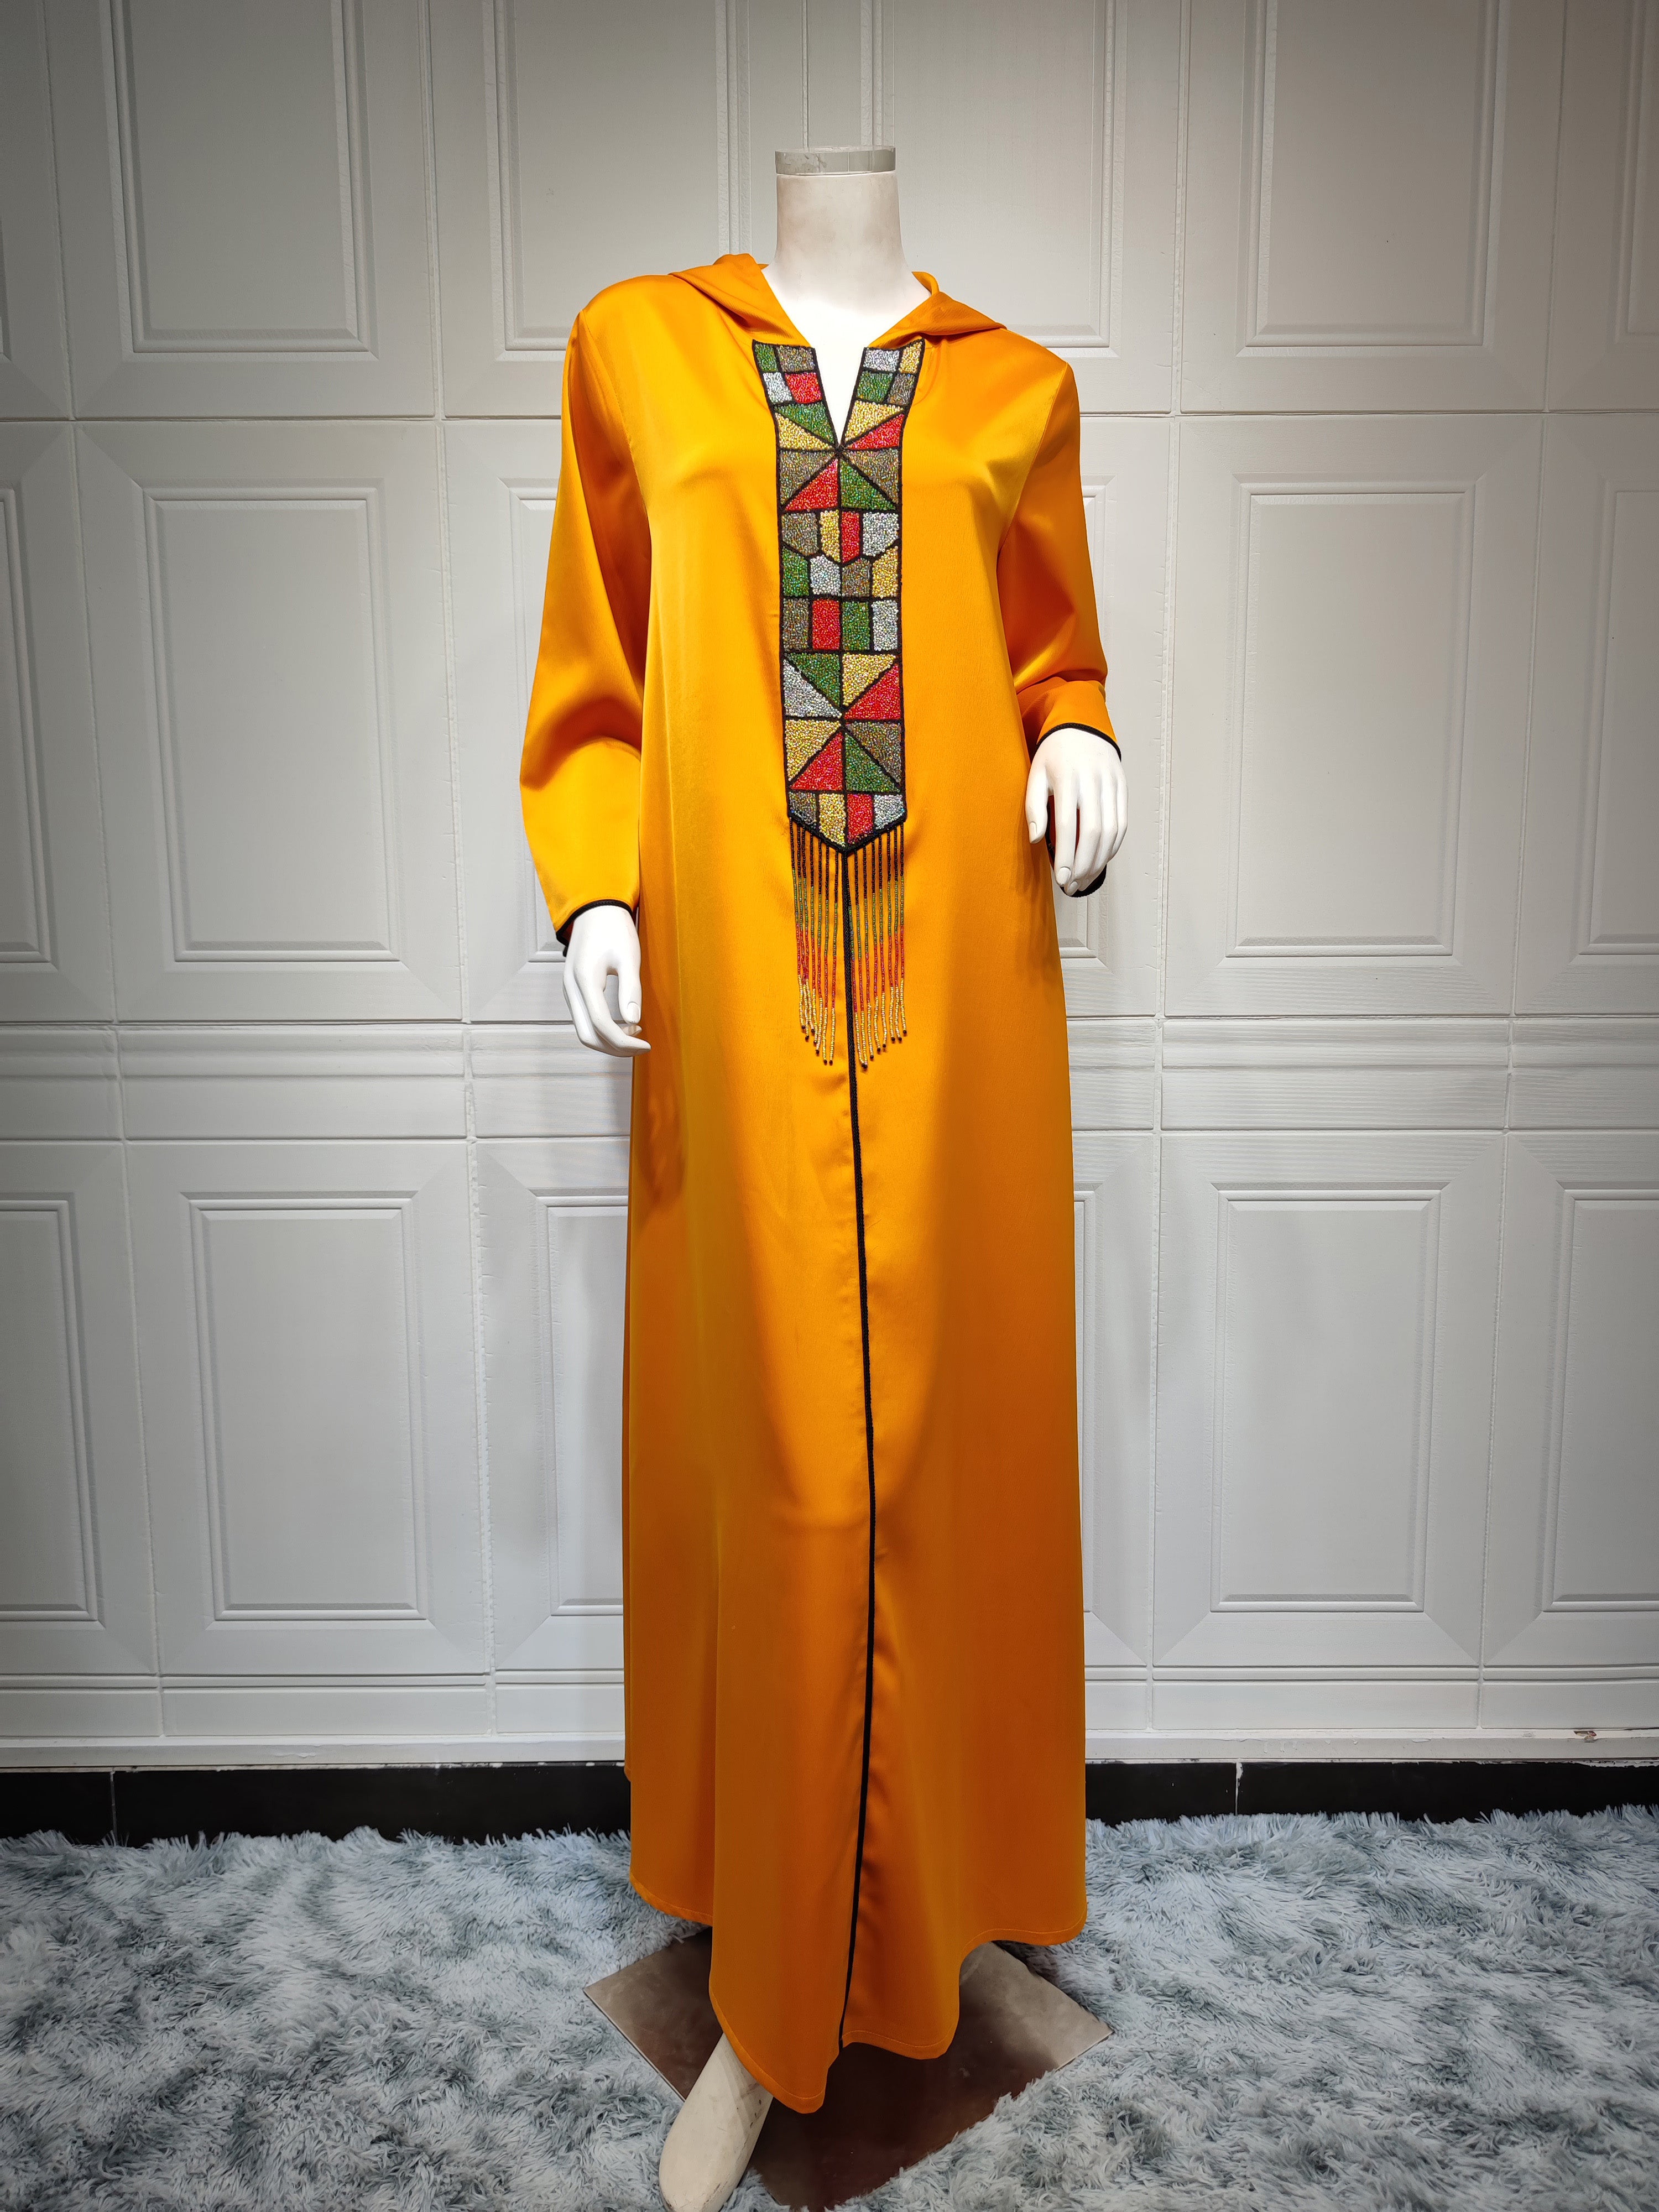 Ethnic Beaded Tassel Hooded Abaya Dress Fashion Muslim Women Clothing Moroccan Caftan Arabic Robe Orange